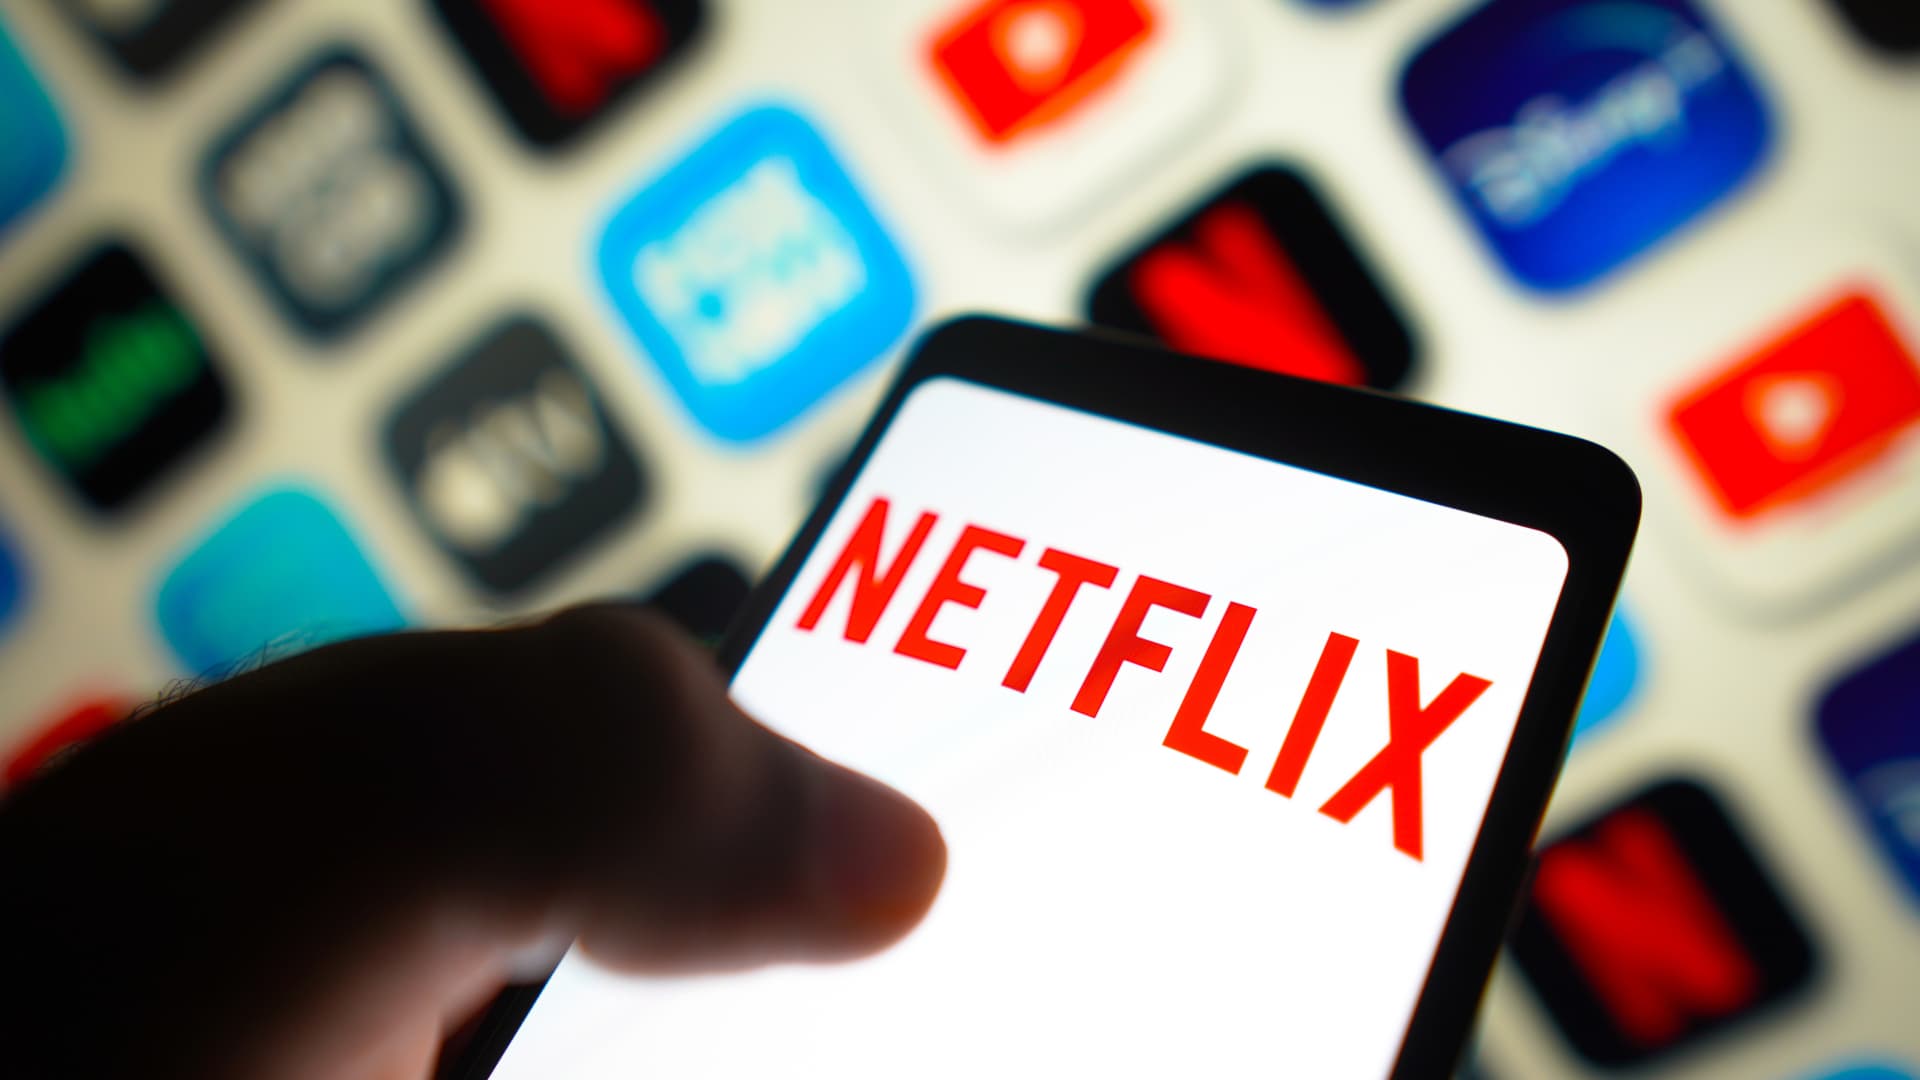 Netflix ad tier has 40 million users